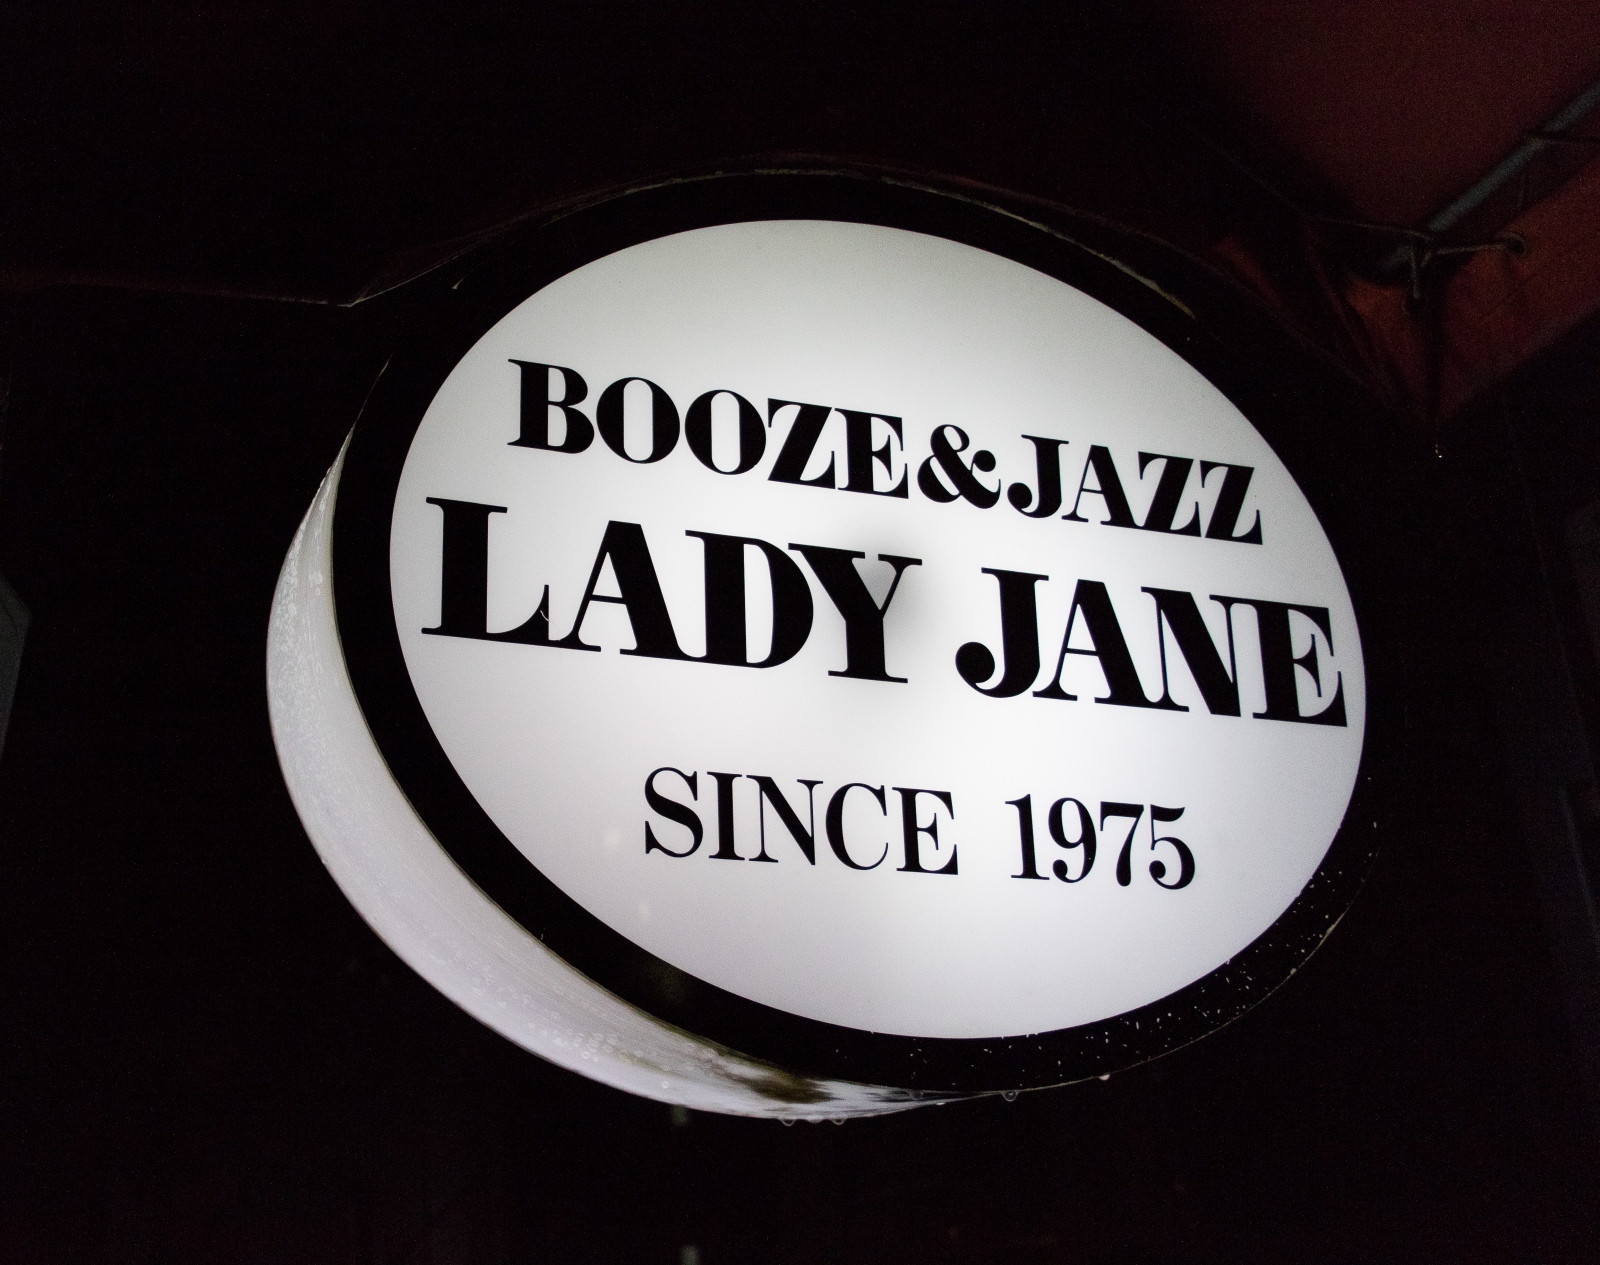 Lady Jane - 